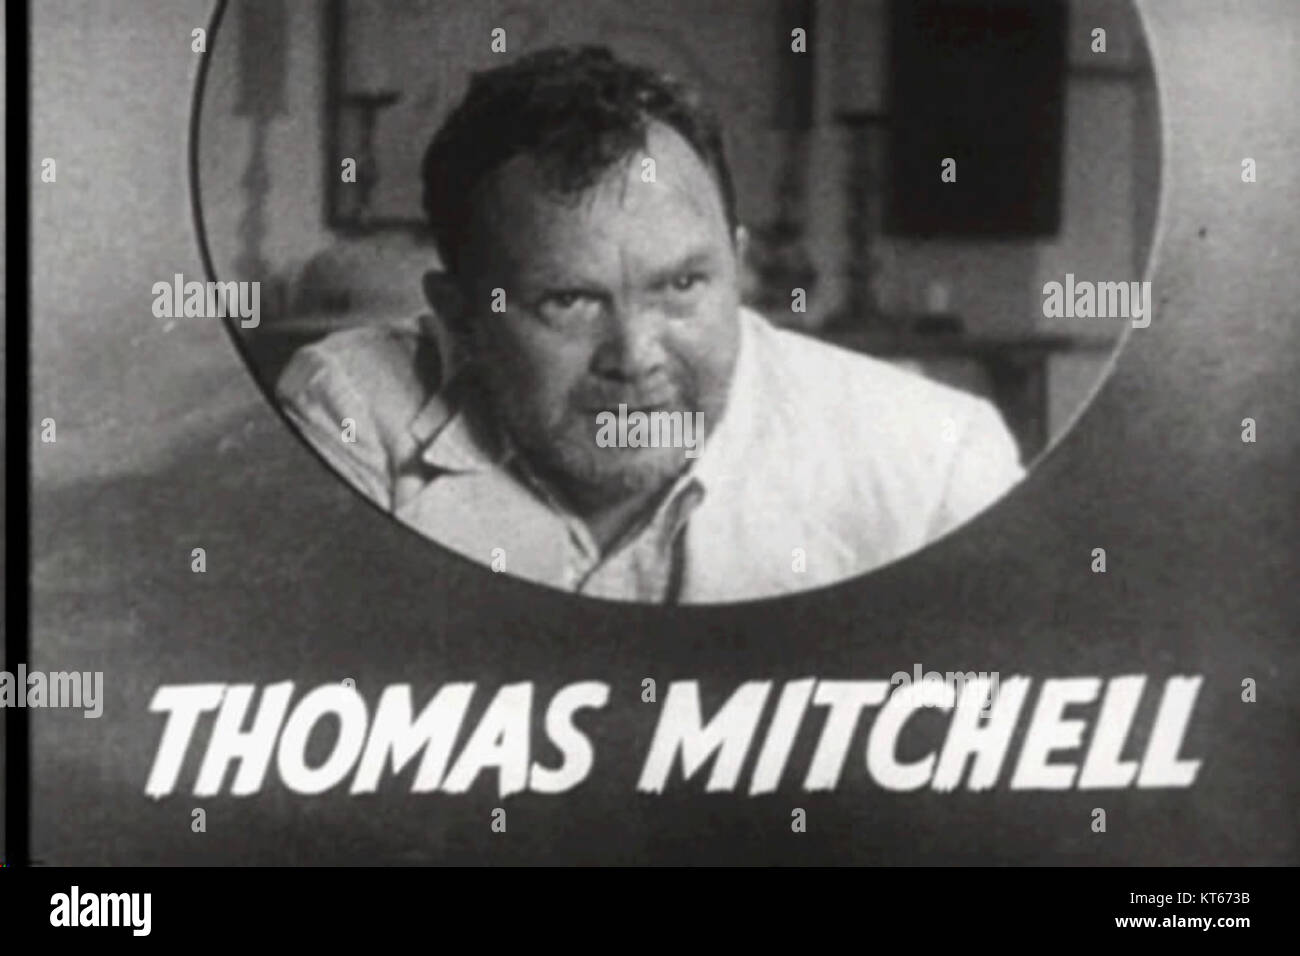 Thomas mitchell Black and White Stock Photos & Images - Alamy